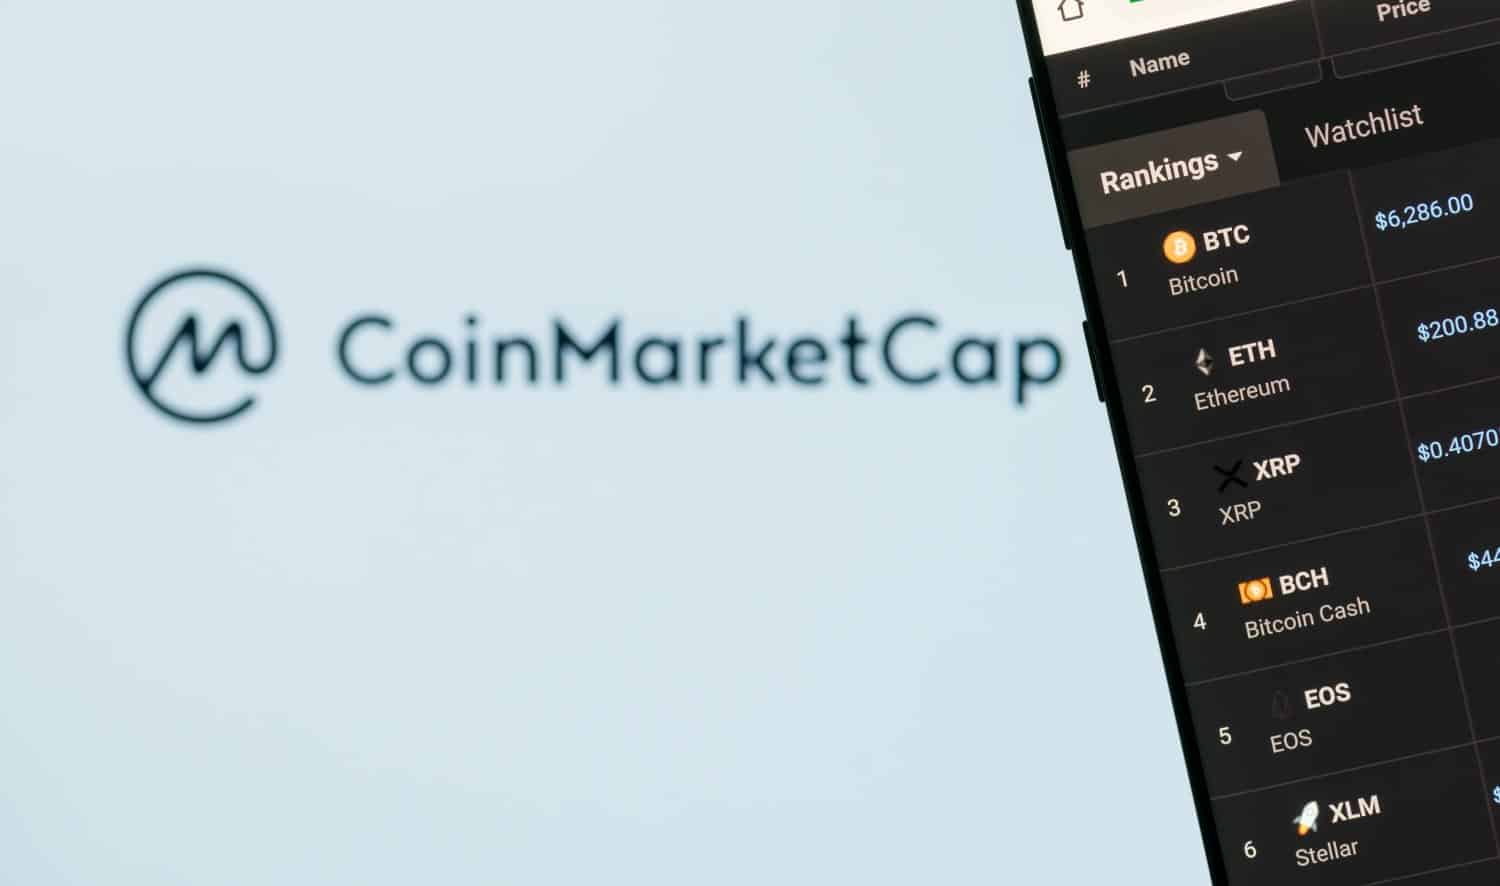 CoinMarketCap glitch boosts Bitcoin (BTC) price to $789B